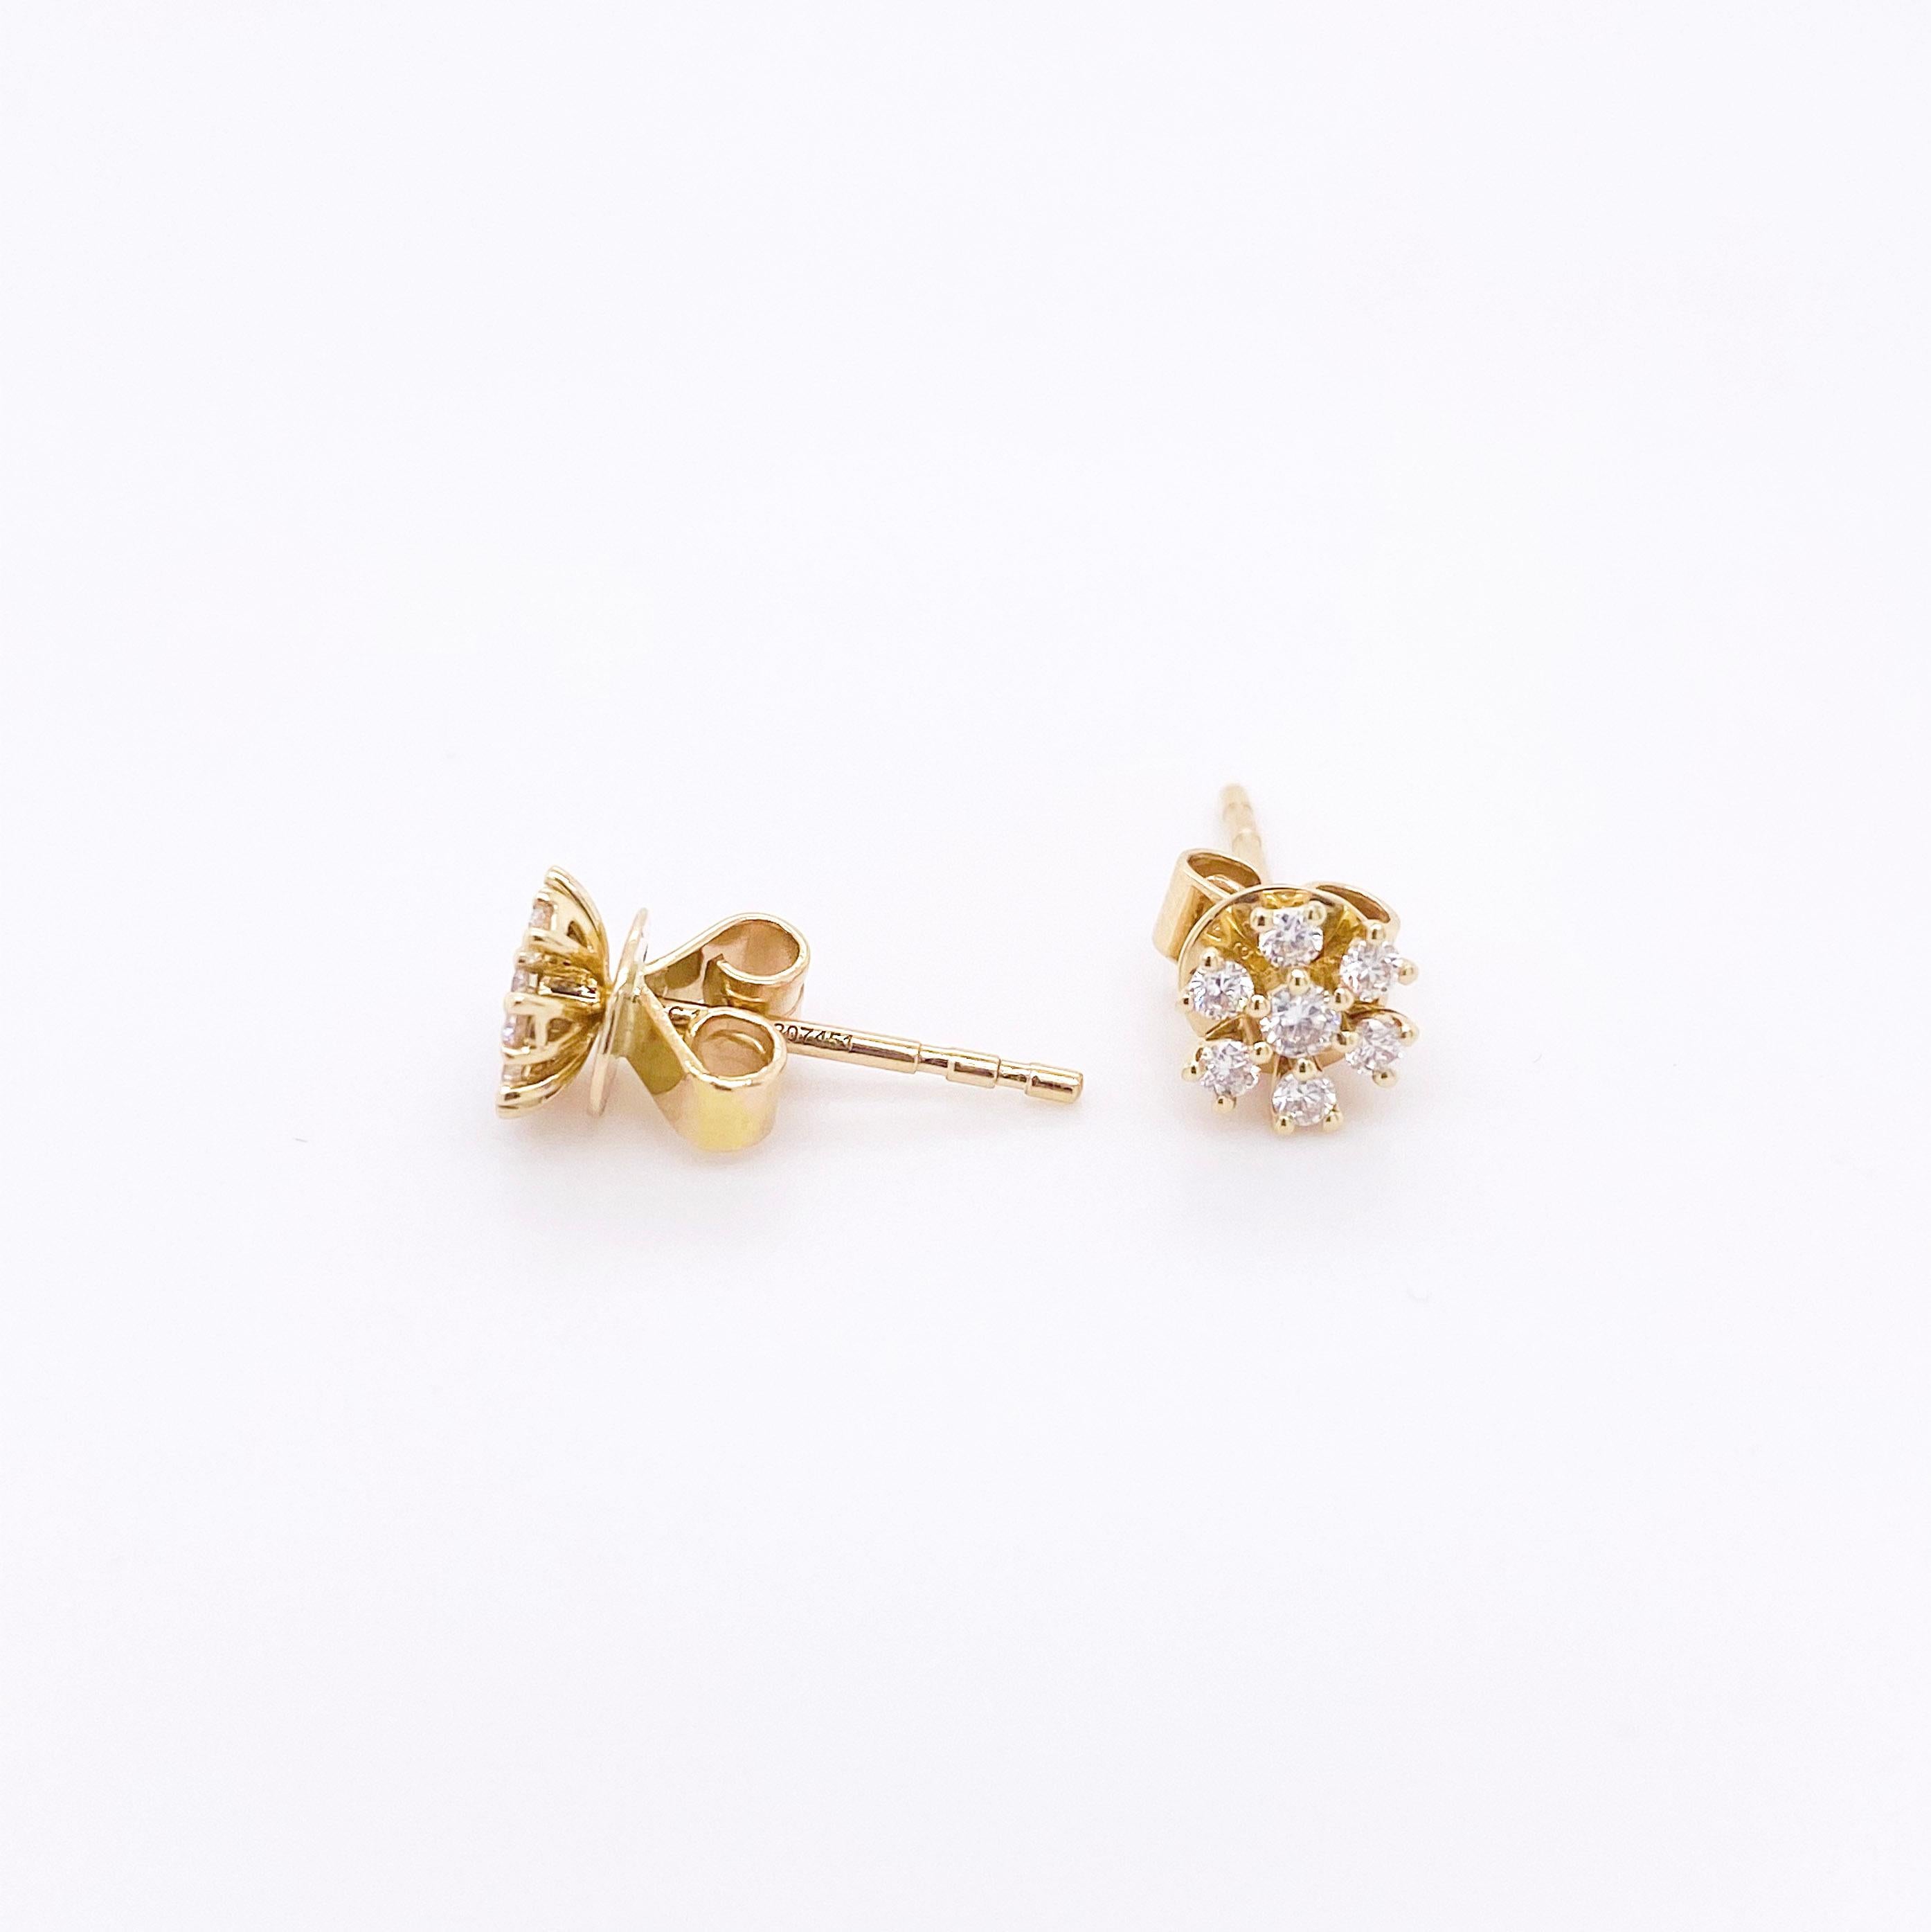 Modern Diamond Stud Earrings, 14K Yellow Gold Diamond Earrings, Flower Diamond Cluster